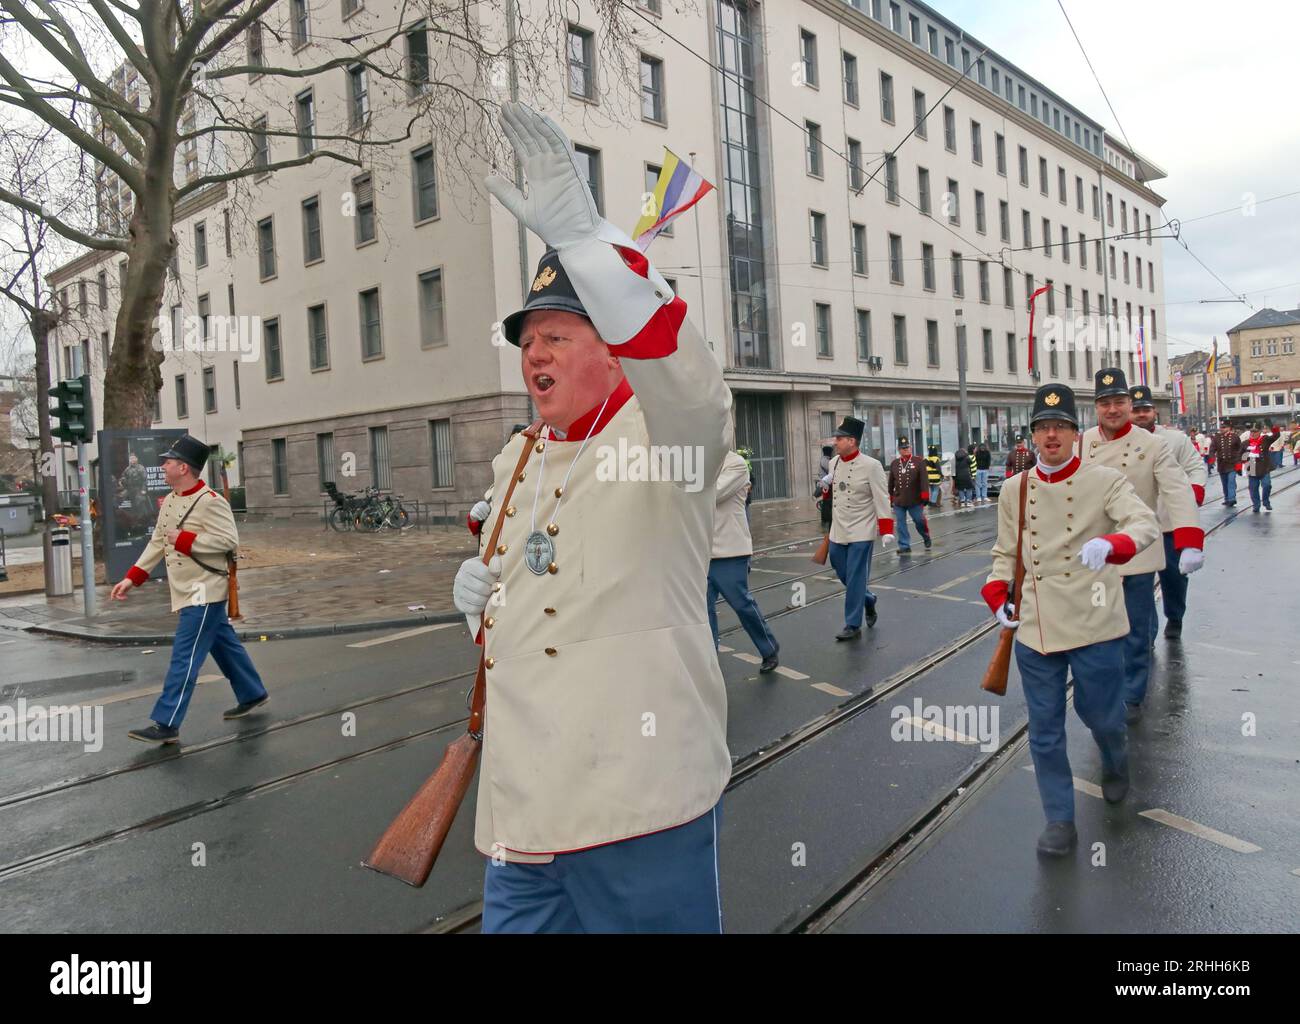 Oaths Sunday at Meenzer Fassenacht, carnival celebration, Mainz city centre, Rhineland-Palatinate, Germany, D55126 Stock Photo